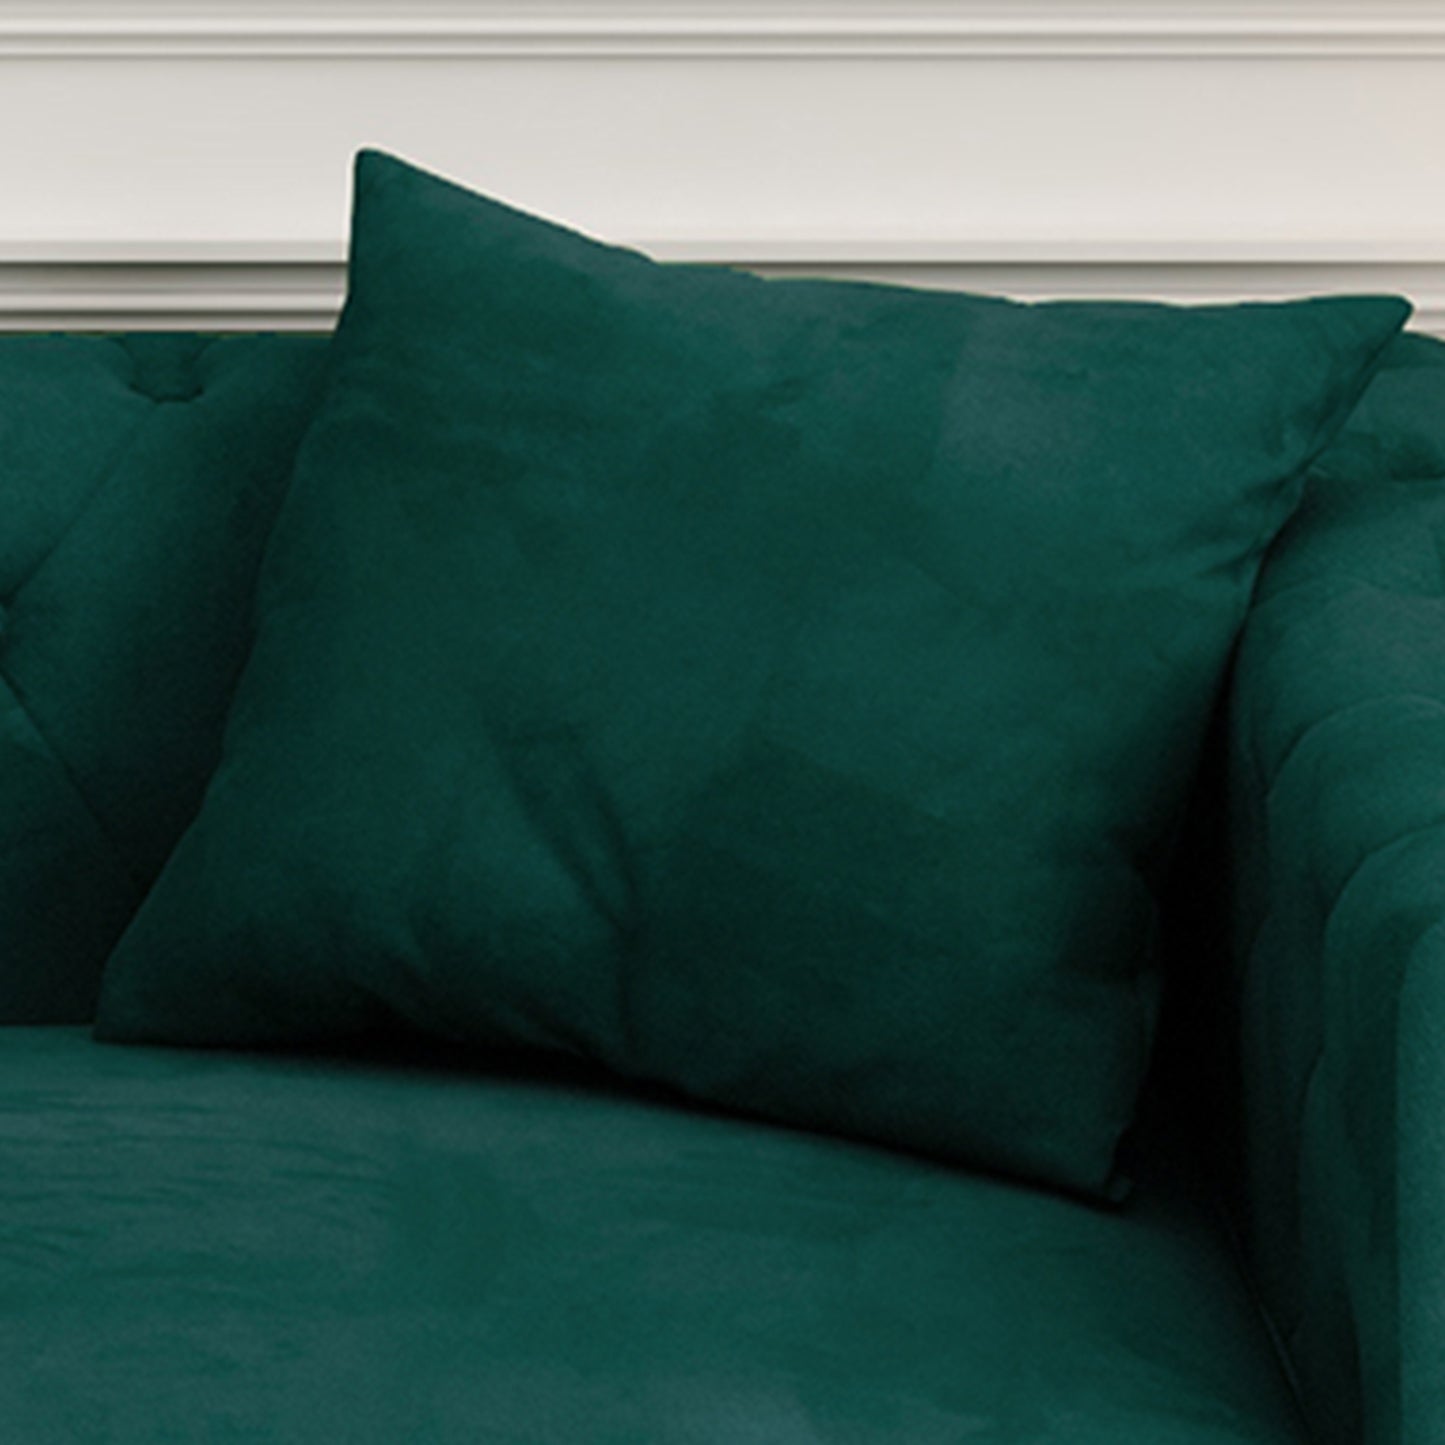 Velvet triple sofa for small Spaces, 2 pillows